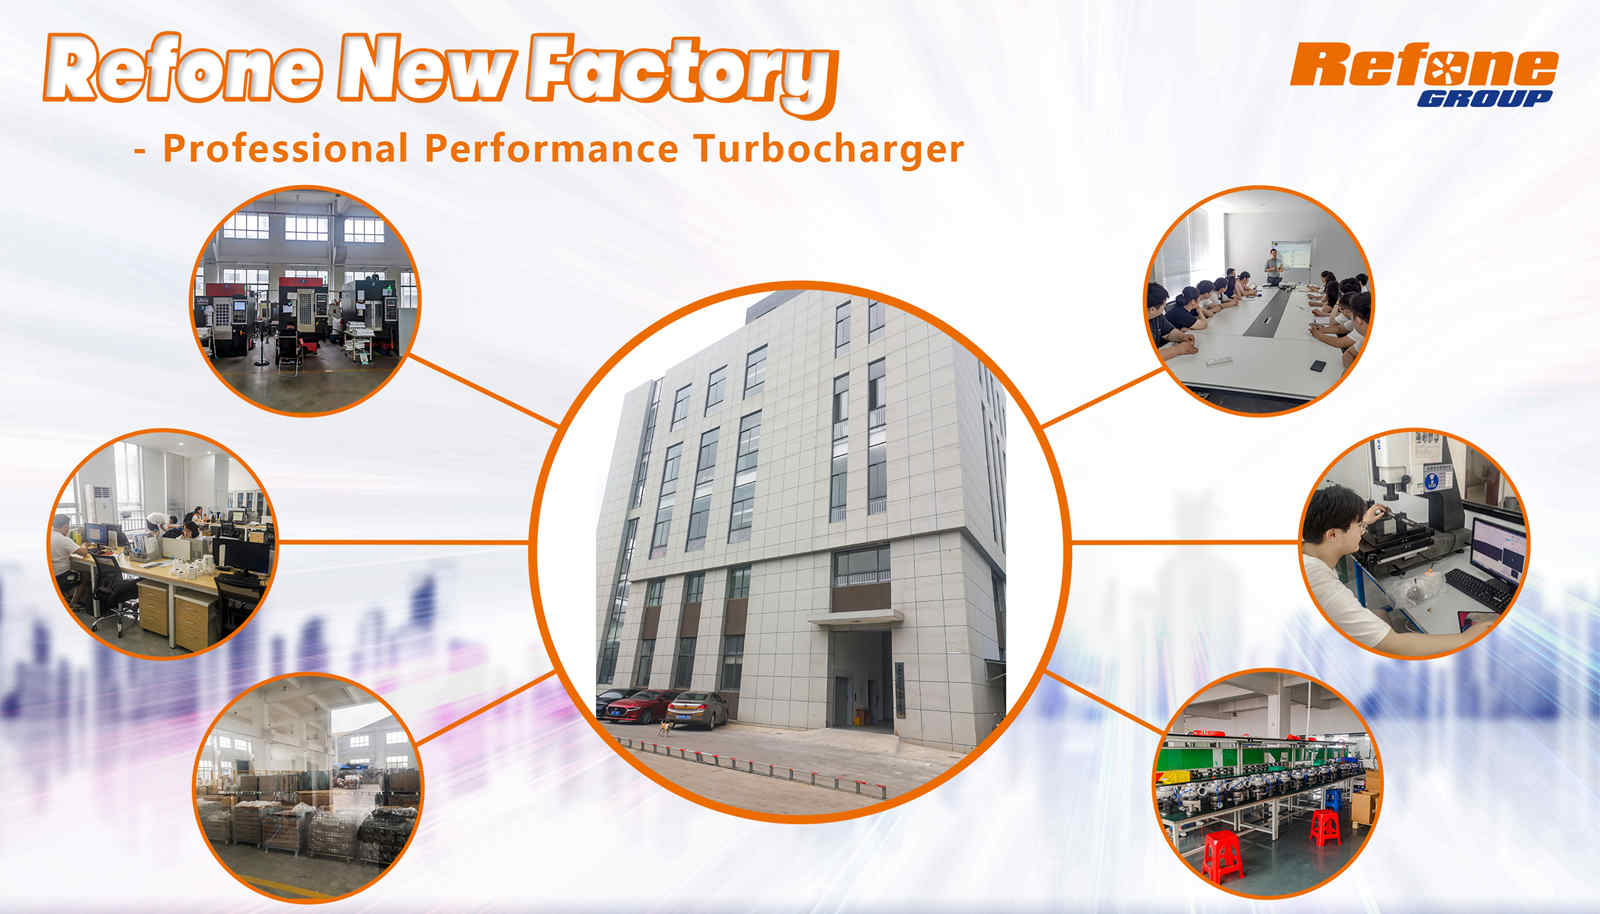 refone new factory - turbocompresor de rendimiento profesional
